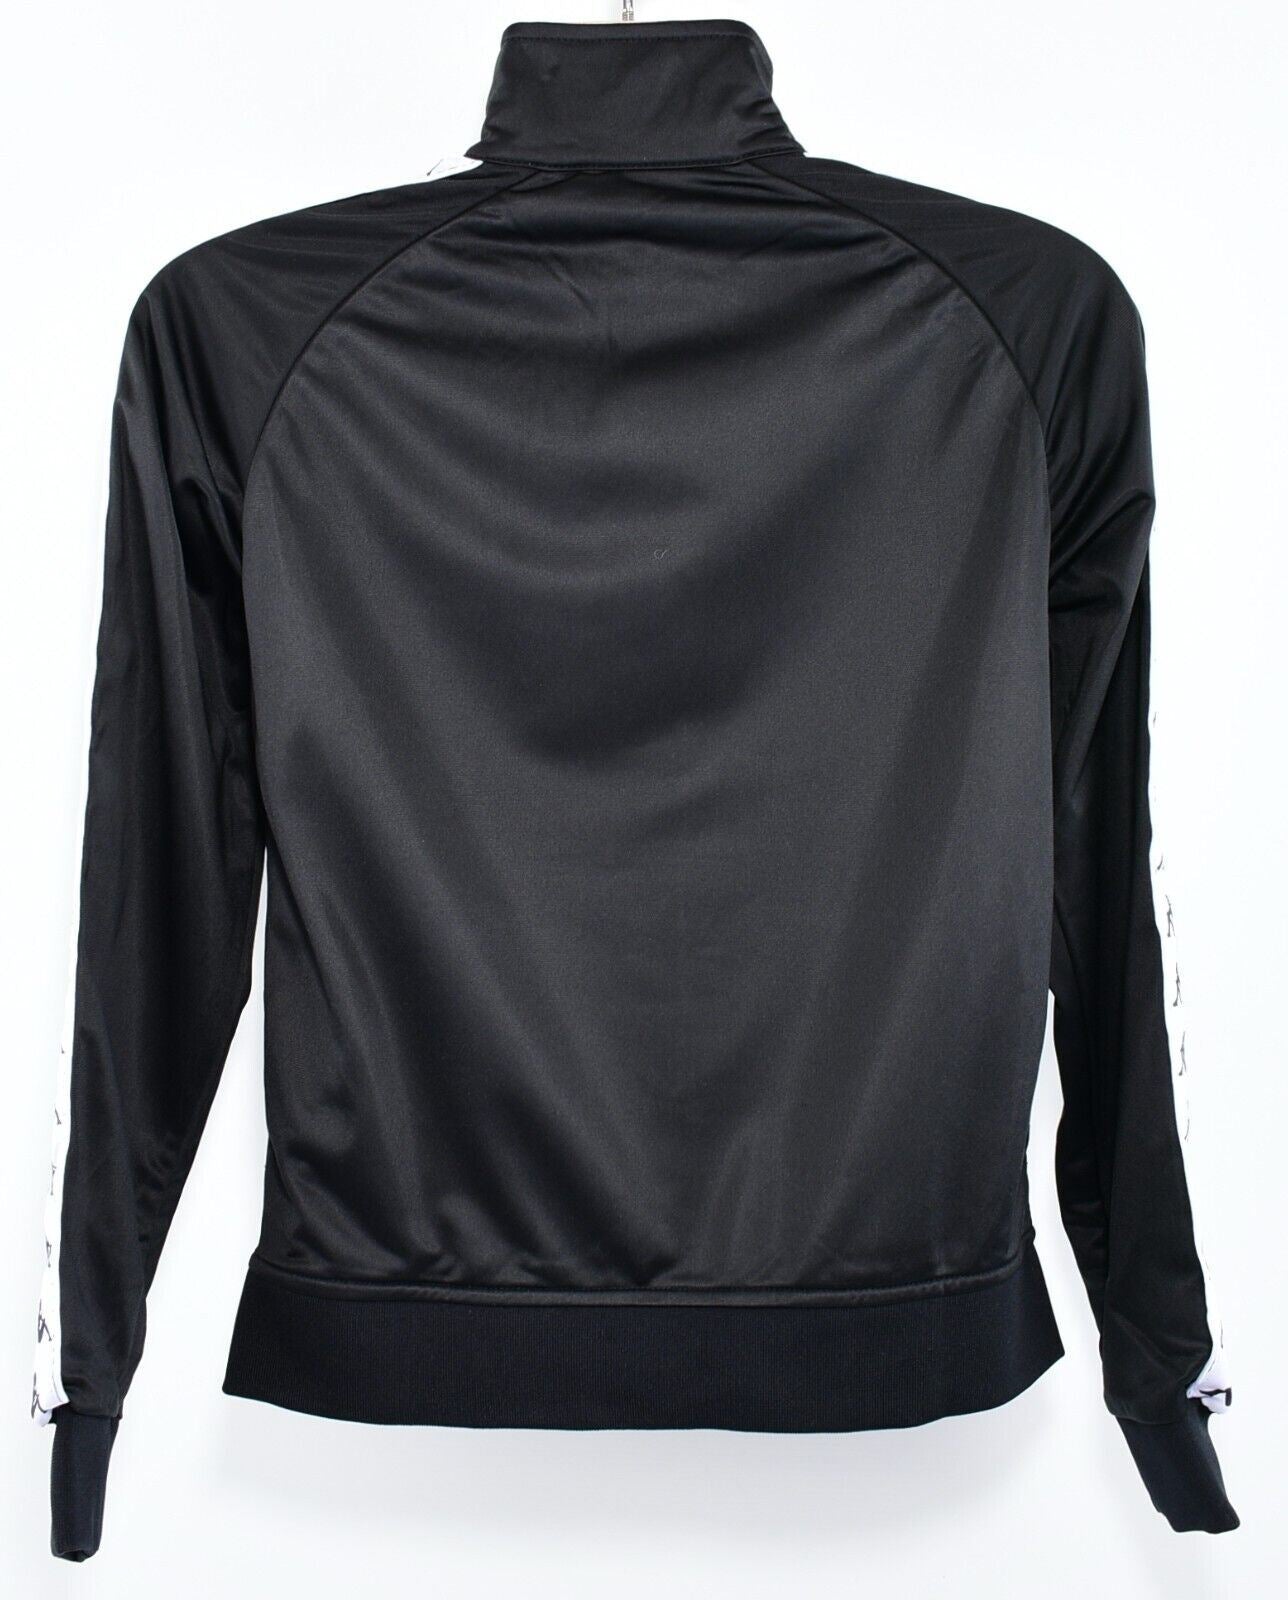 KAPPA Men's Full Zip Track Jacket, Track Suit Top,  SLIM FIT, Black, size LARGE